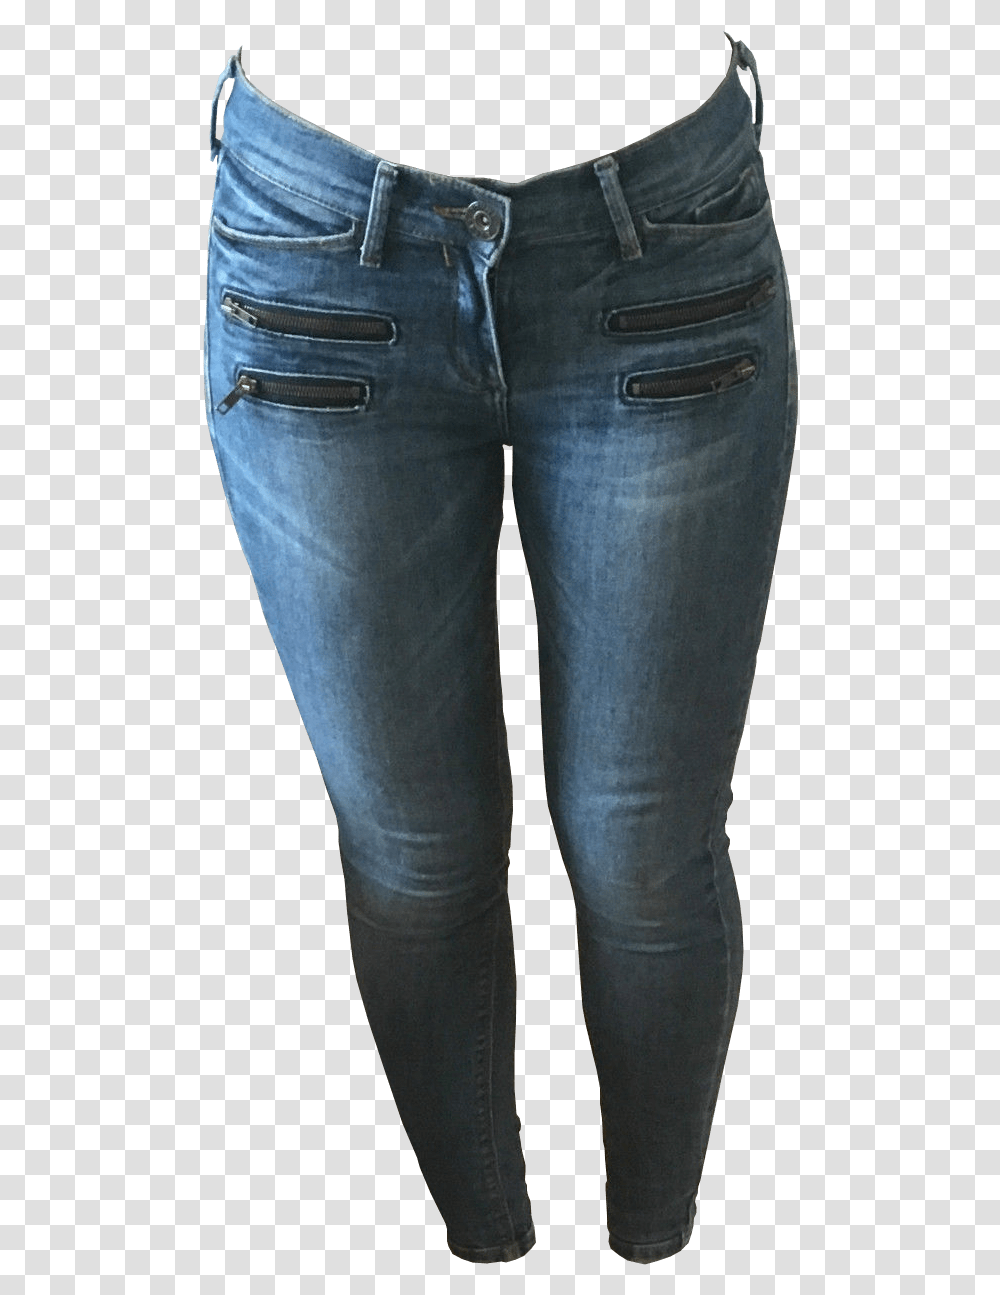 River Island Jeans Jeans Background, Pants, Clothing, Apparel, Denim Transparent Png